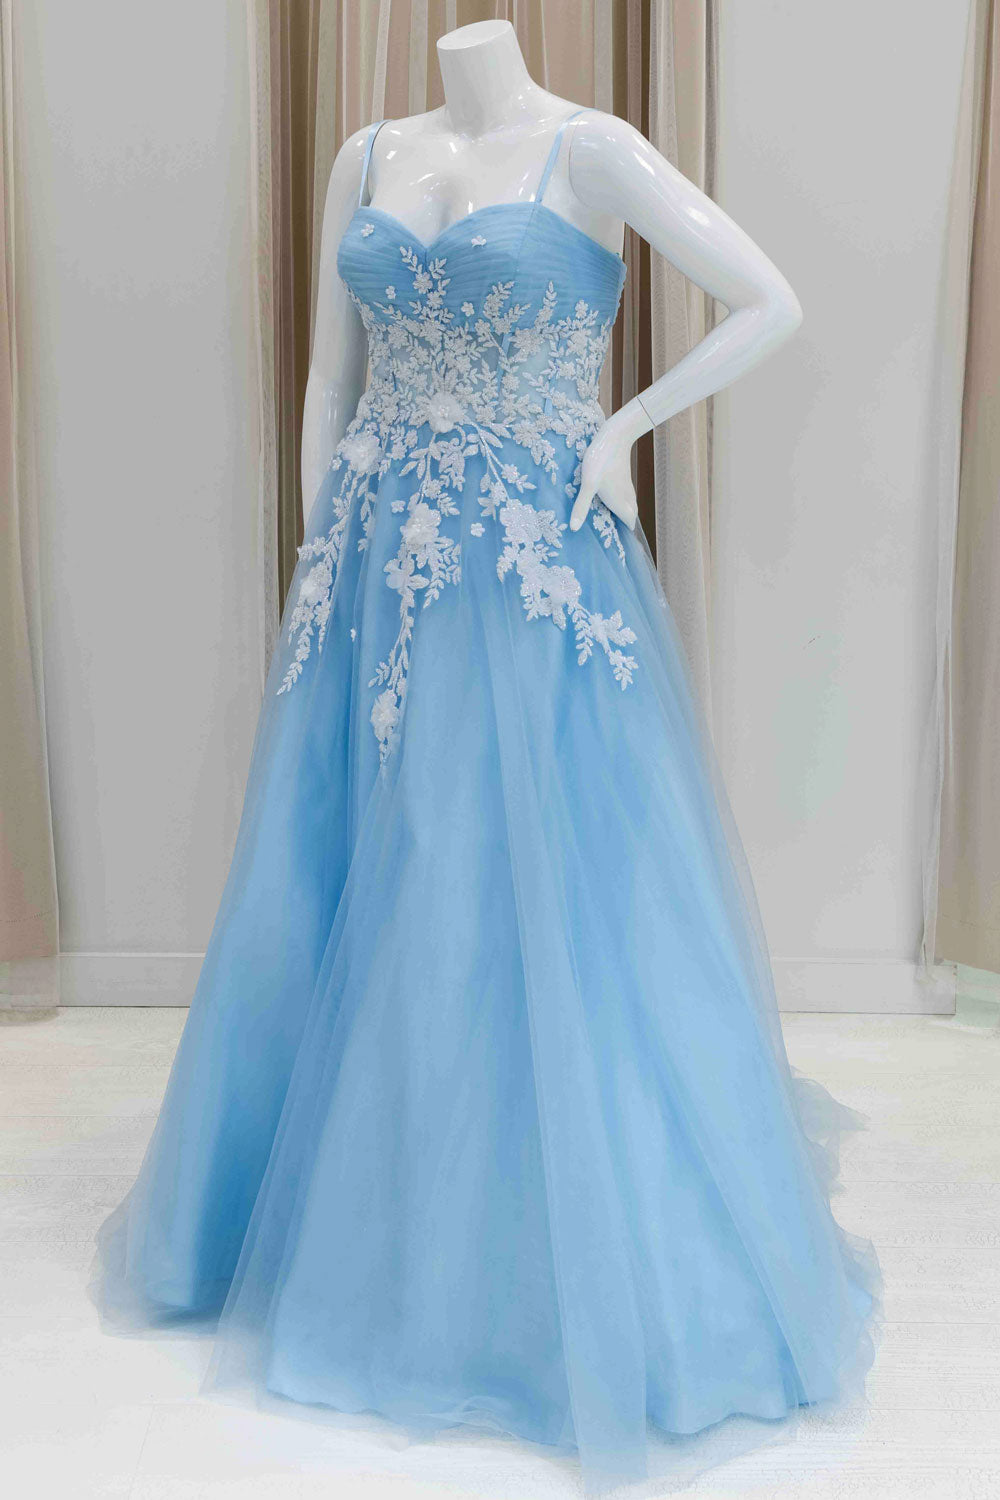 Cinderella Blue Ball Gown